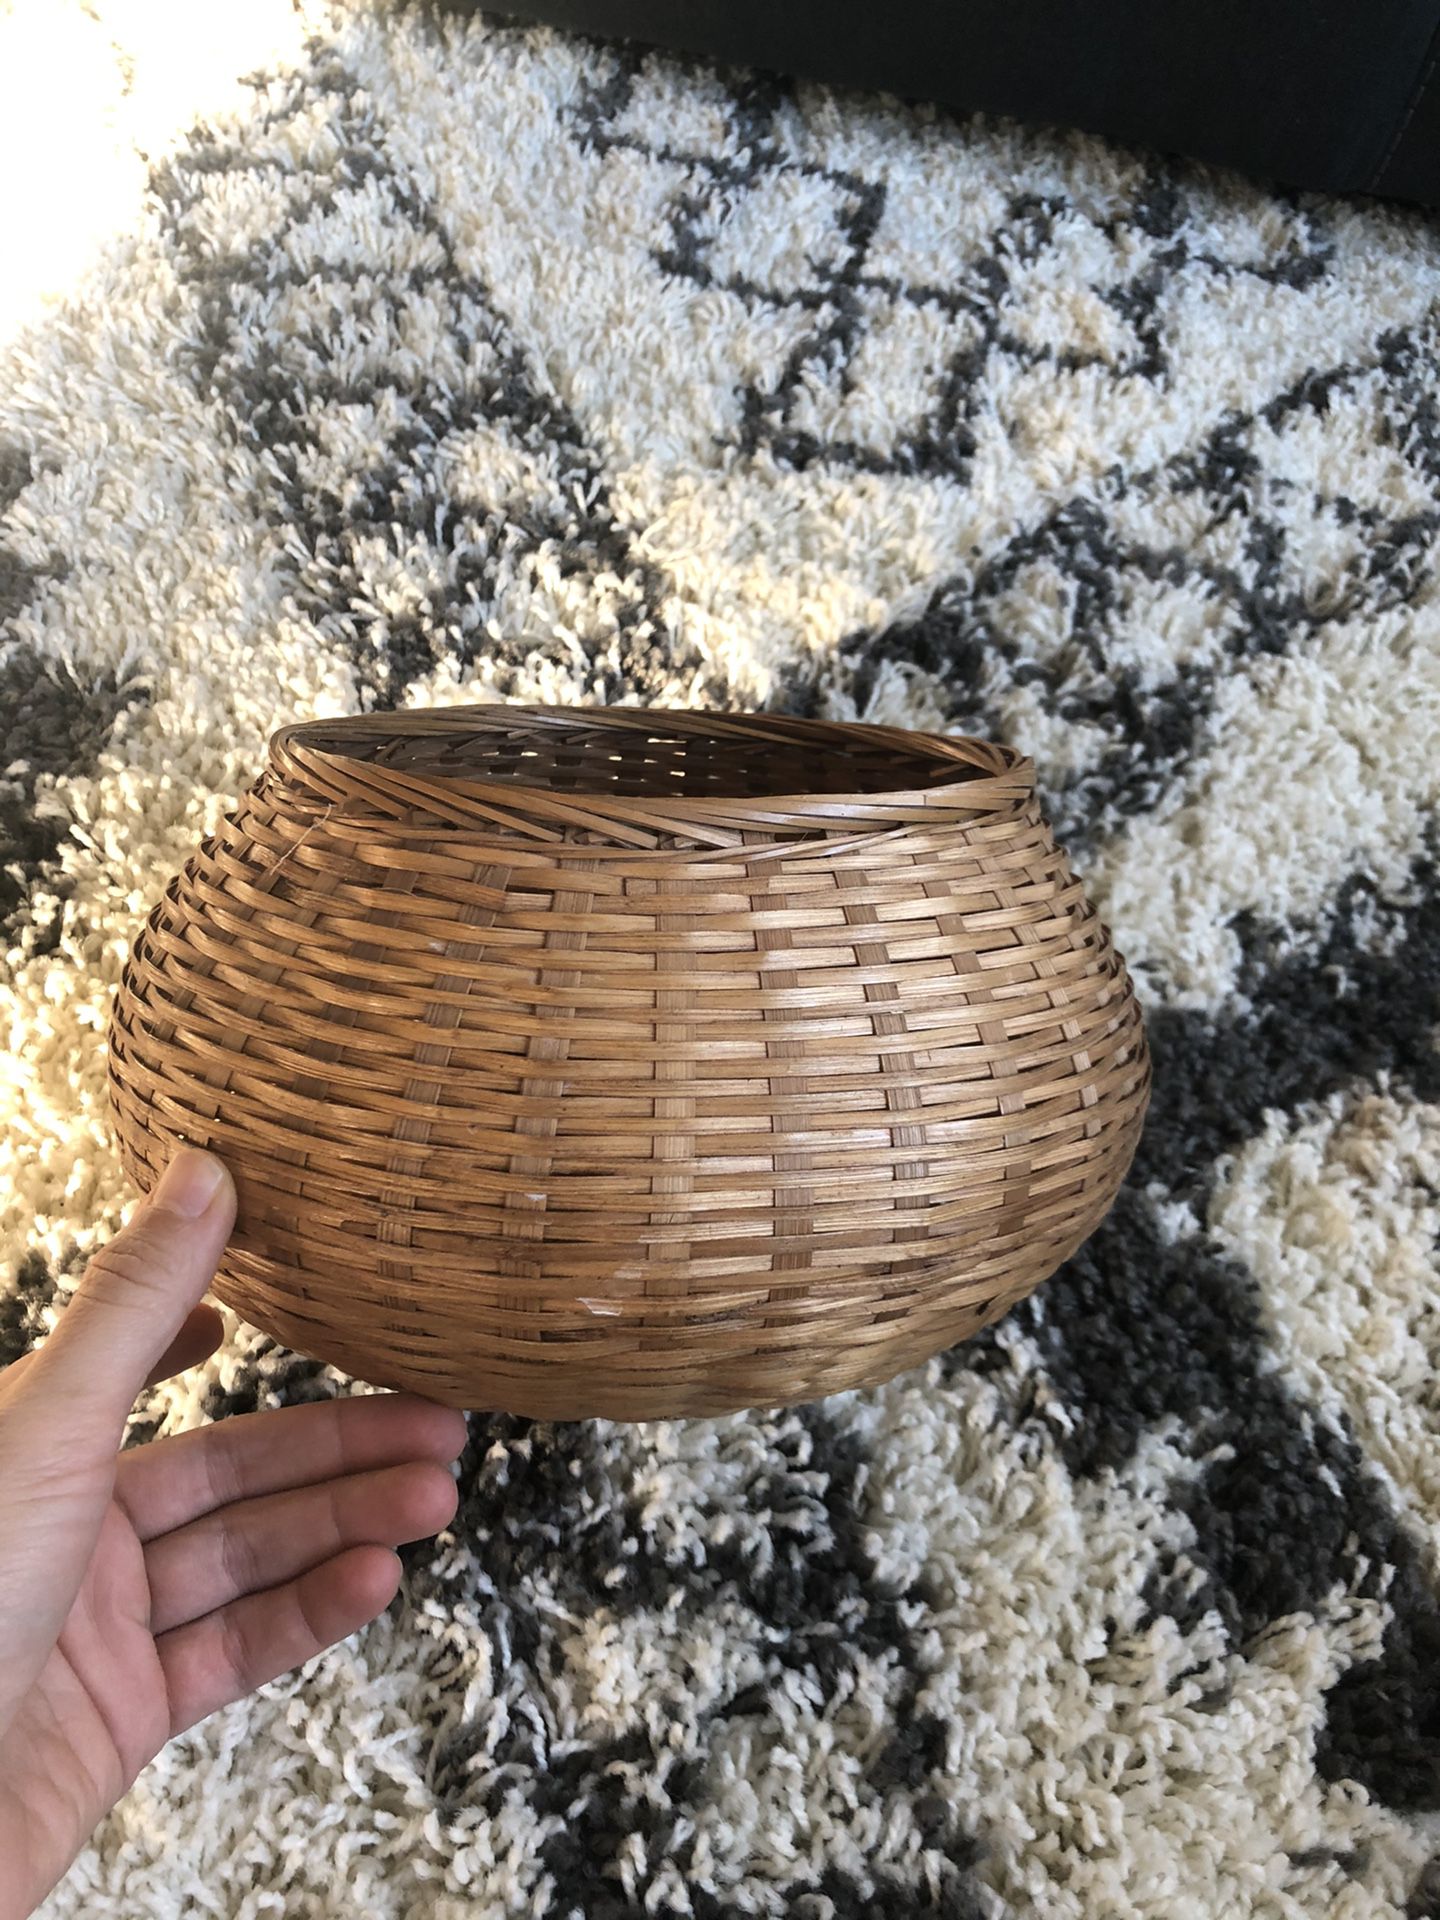 Boho Basket for a plant 🌱 or storage